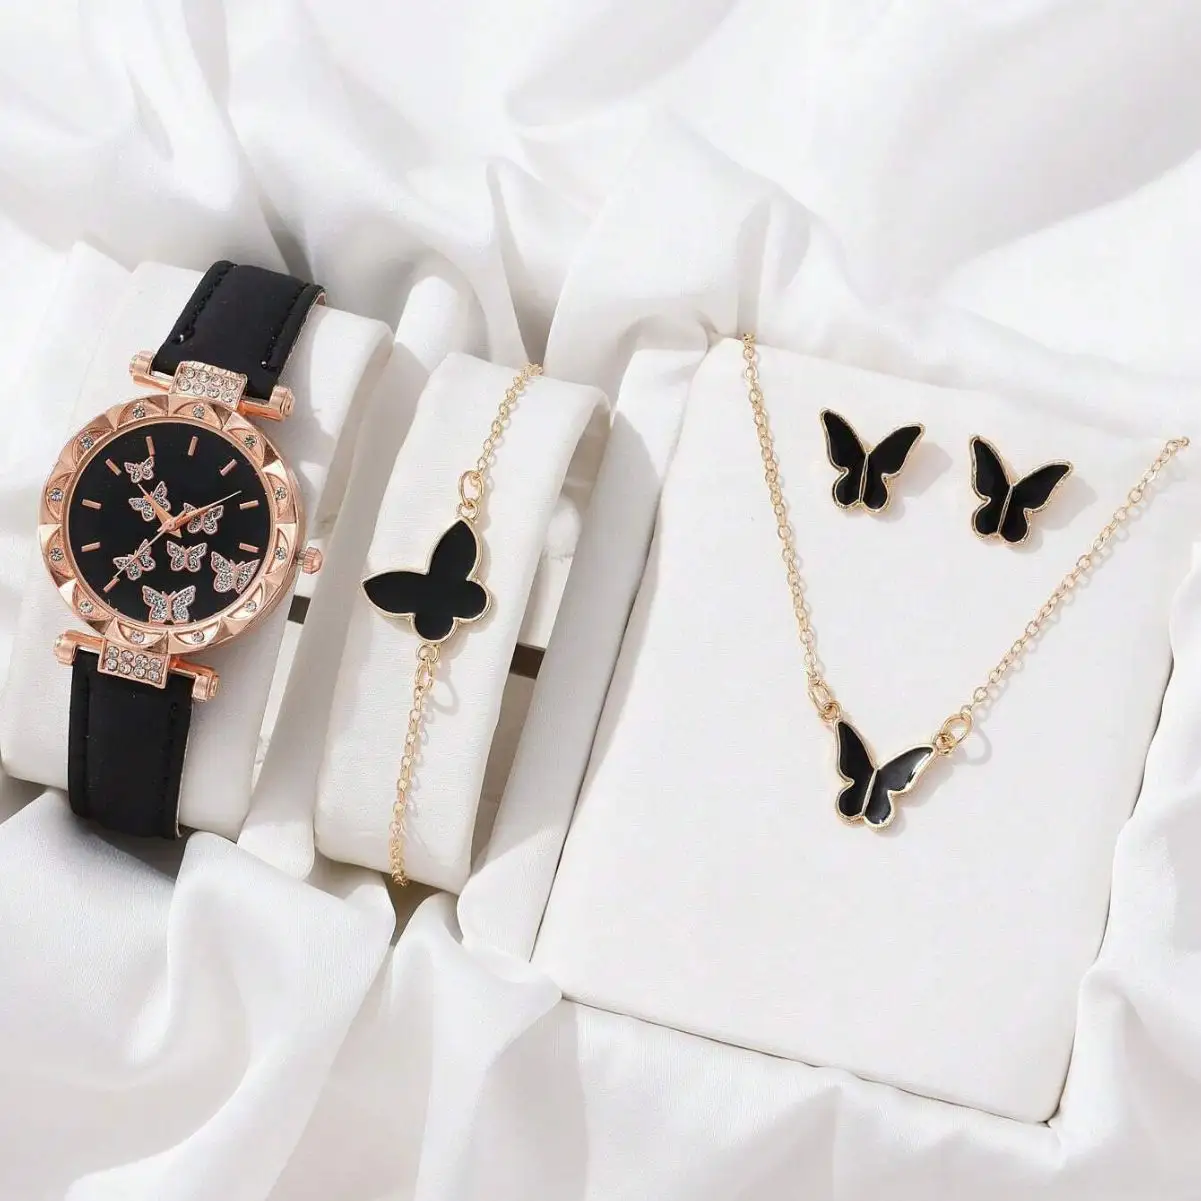 5 Stück Luxus Damen Armbanduhren Kristall Armband Ohr stecker Halskette Set Damen uhr Casual Quarz Armbanduhr Set